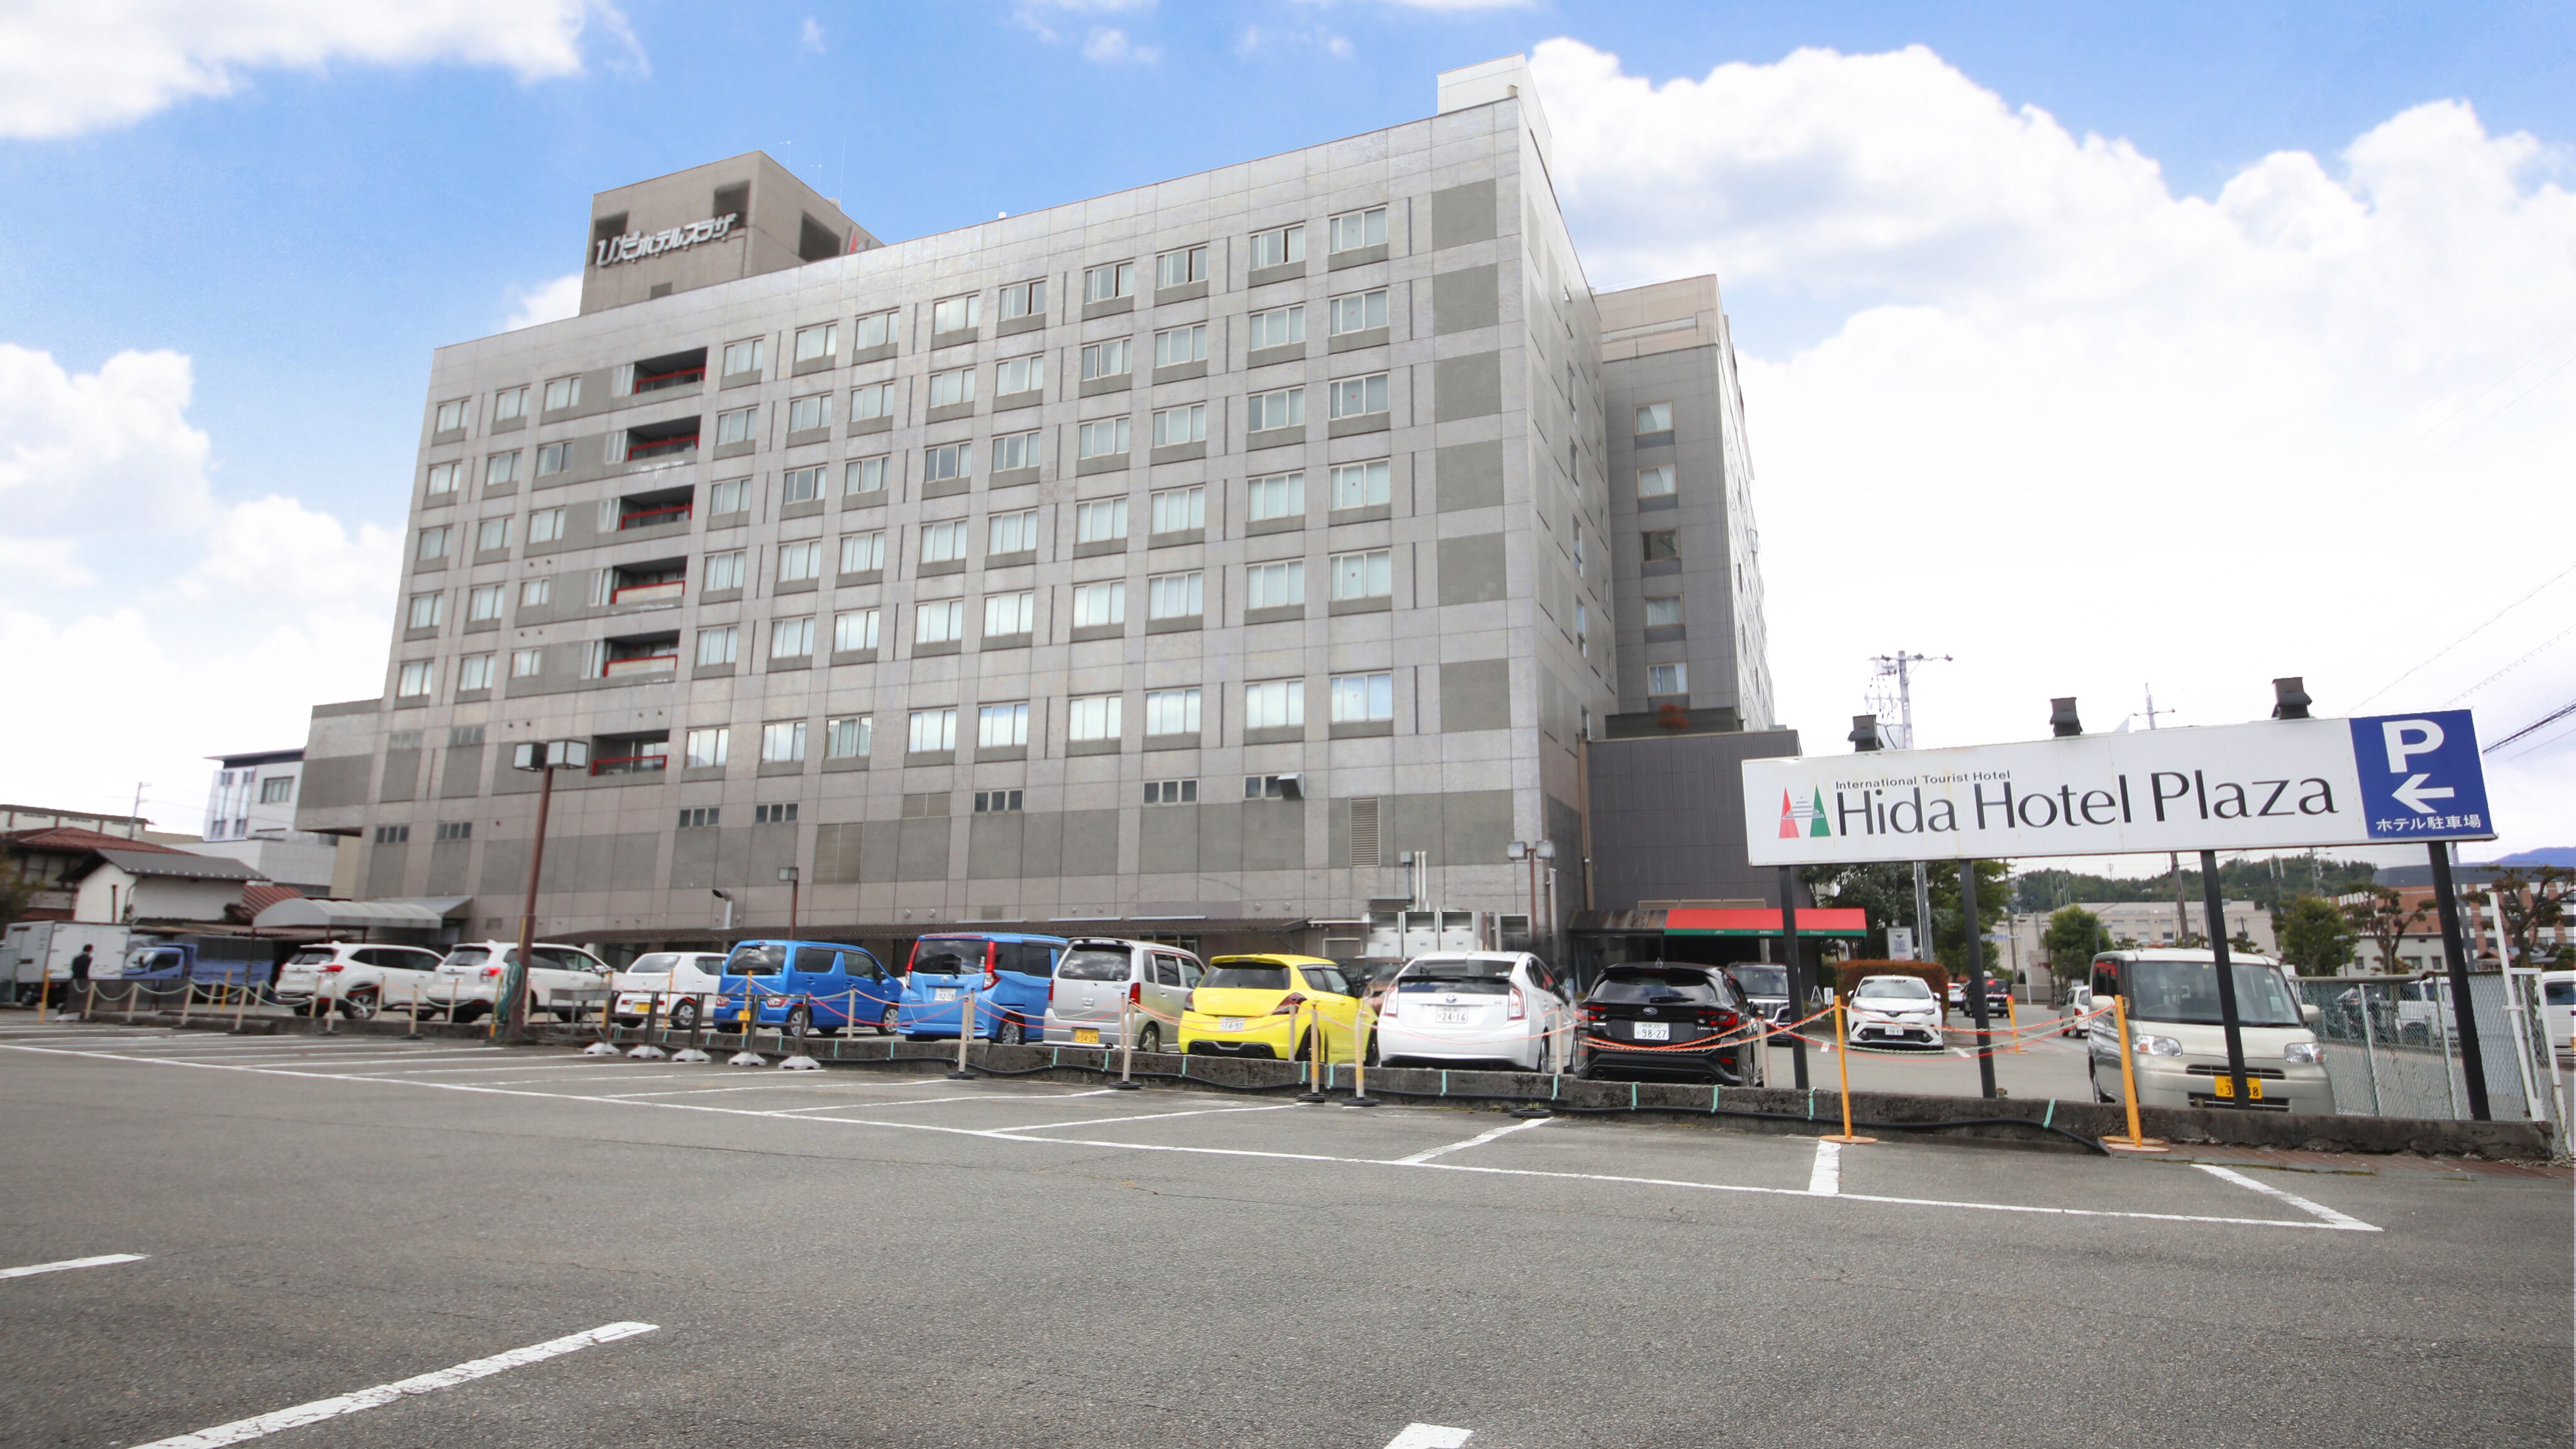 Hotel information and reservations for Hida Takayama Onsen Hida